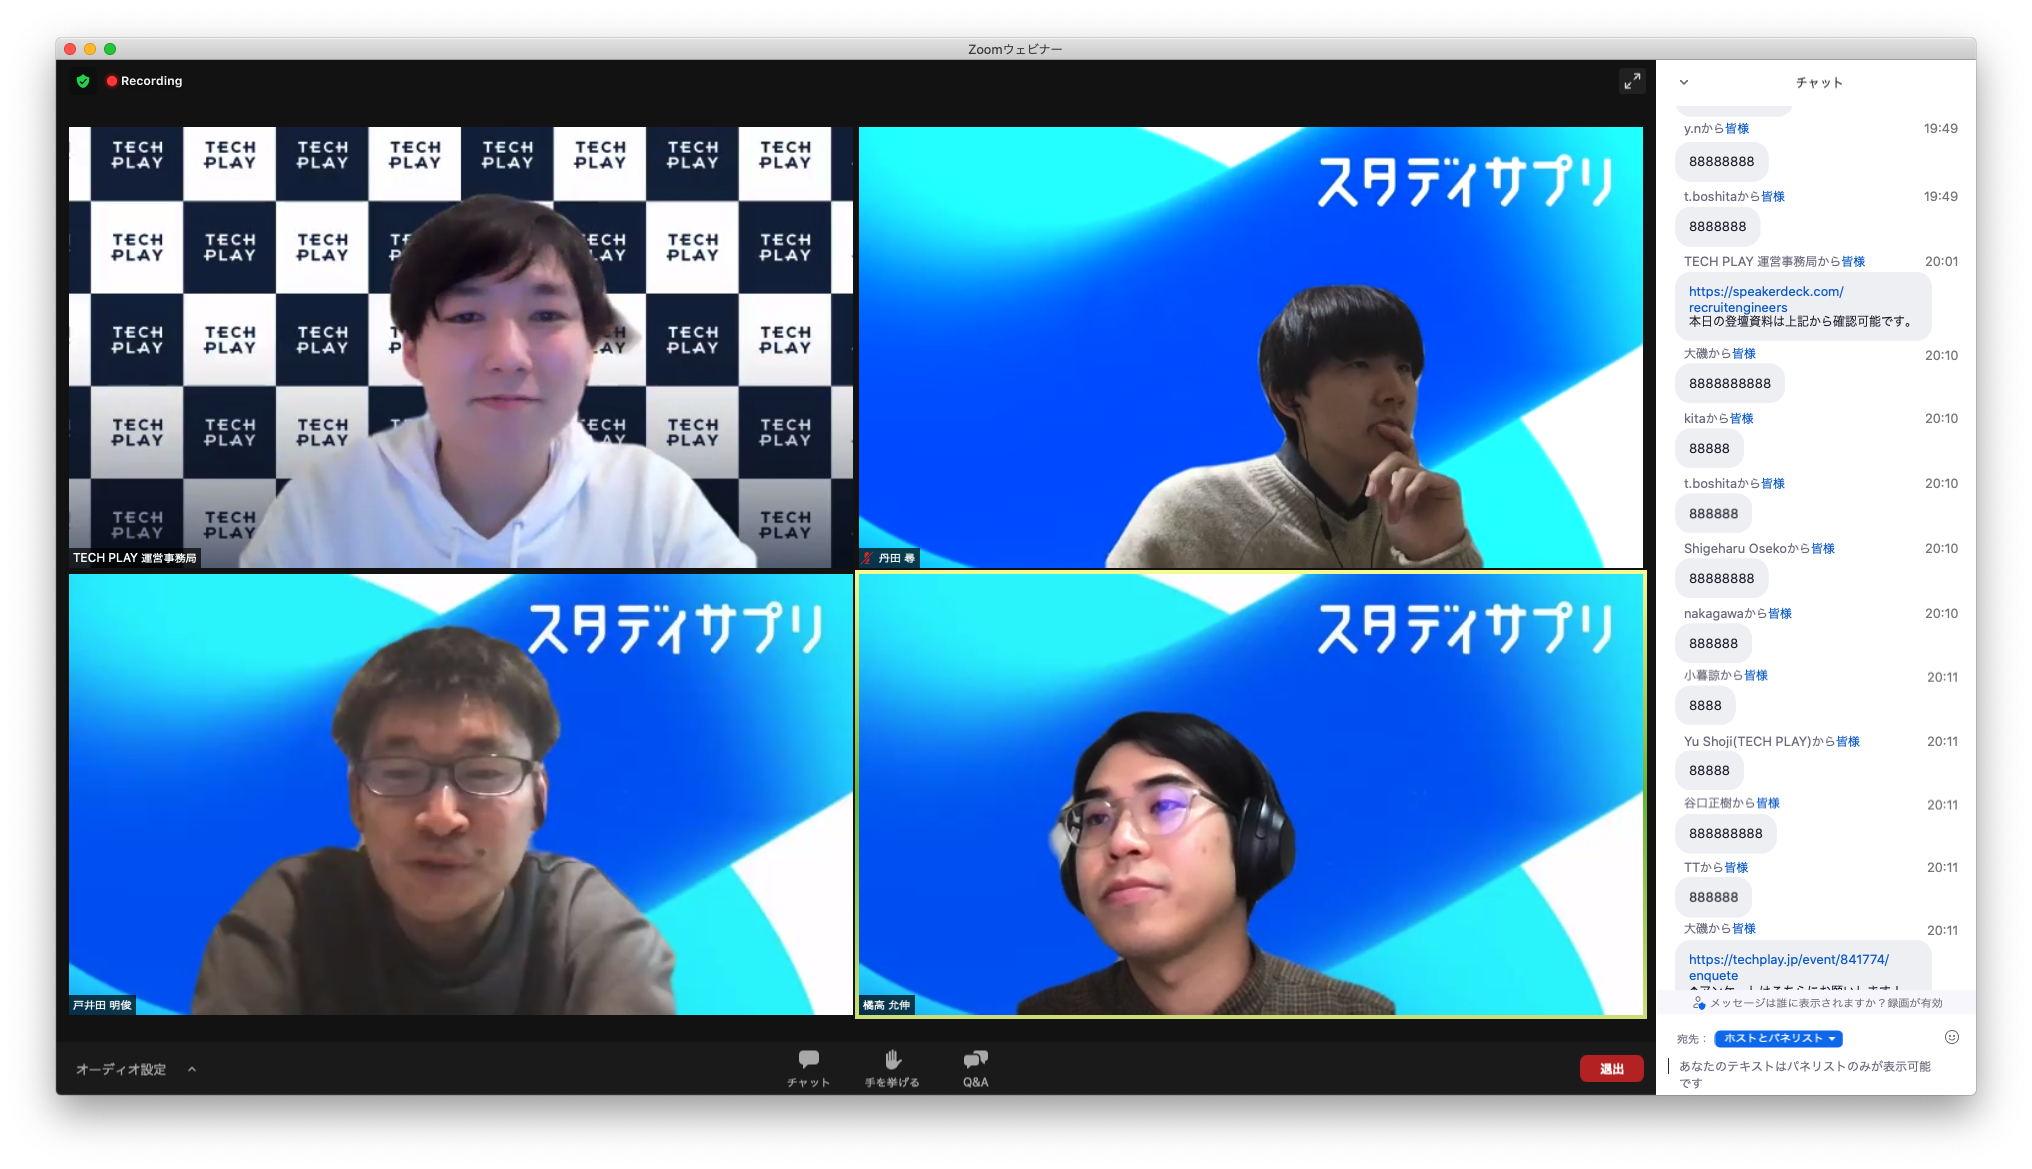 Zoomの画面（左上: 司会の中崎さん[TECH PLAY]、左下: 戸井田、右上: 丹田、右下: 橘高）